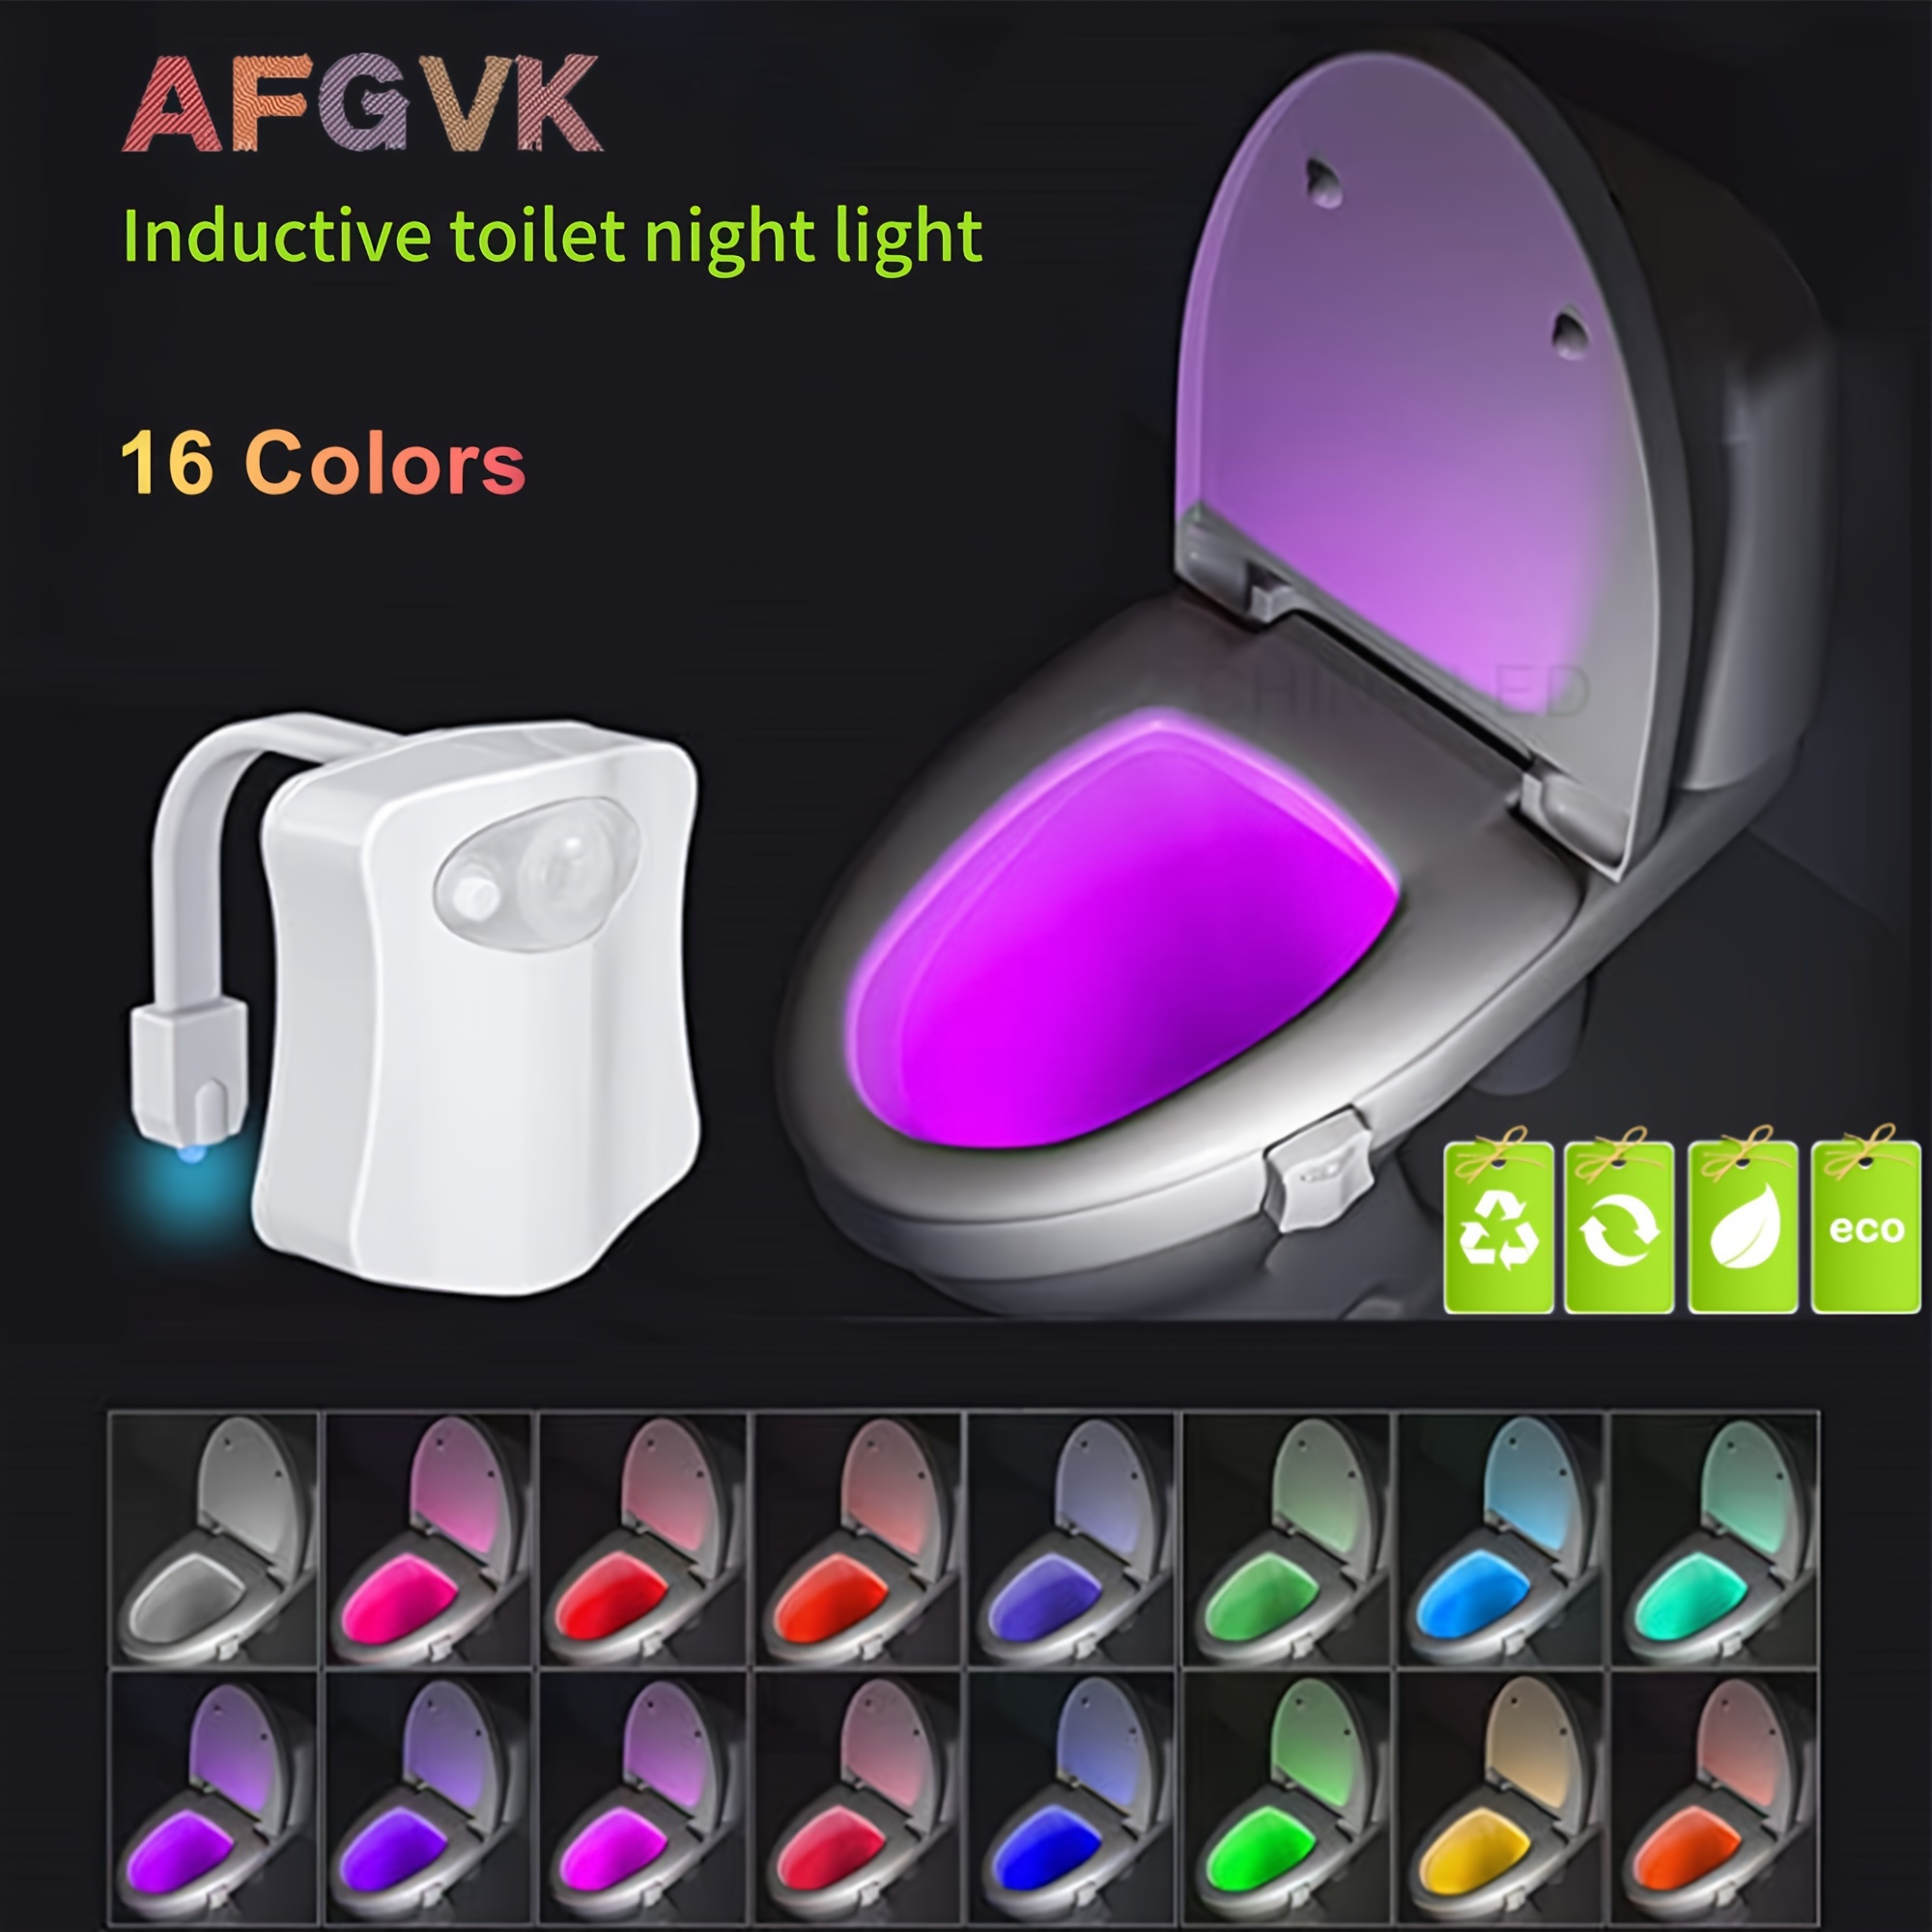 GLOBAL PHOENIX Colorful Toilet Bowl Lights Motion Sensor LED